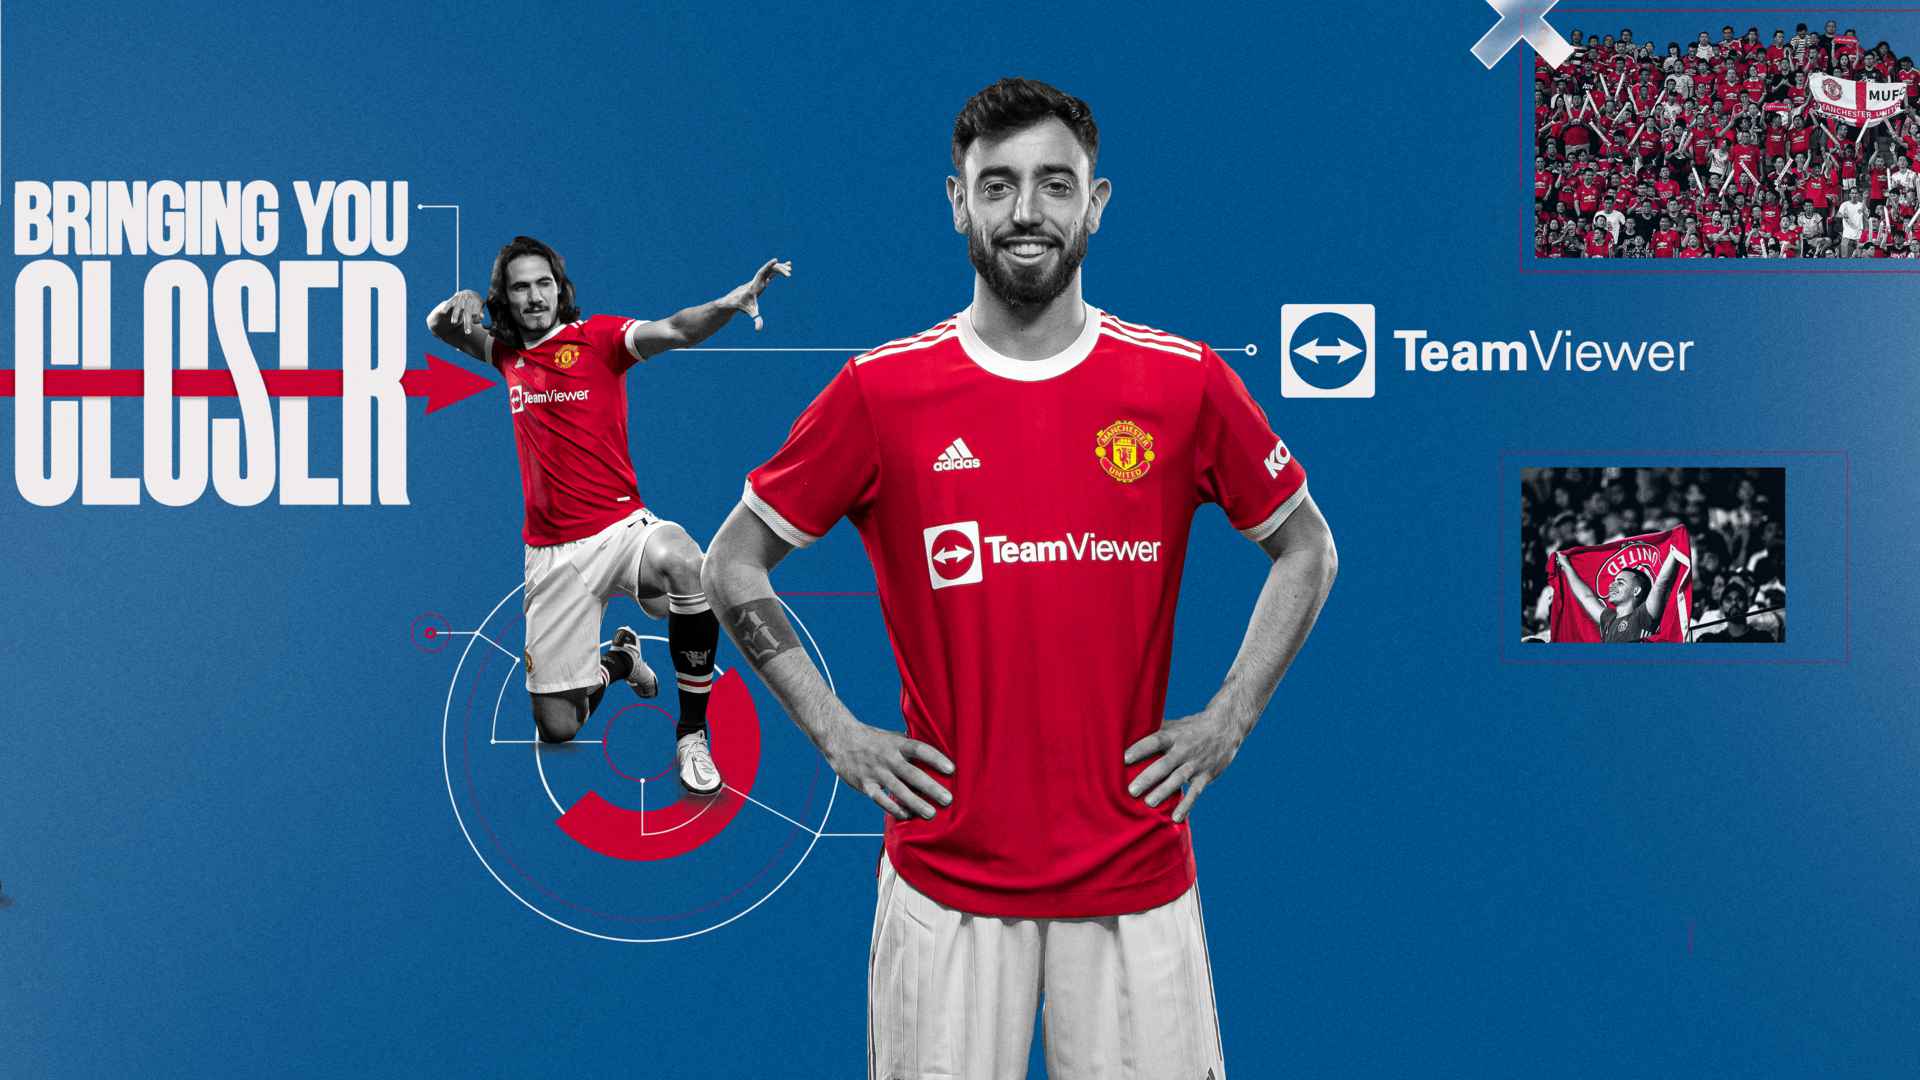 Manchester United - Team Viewer Shirt Sponsorship Deal